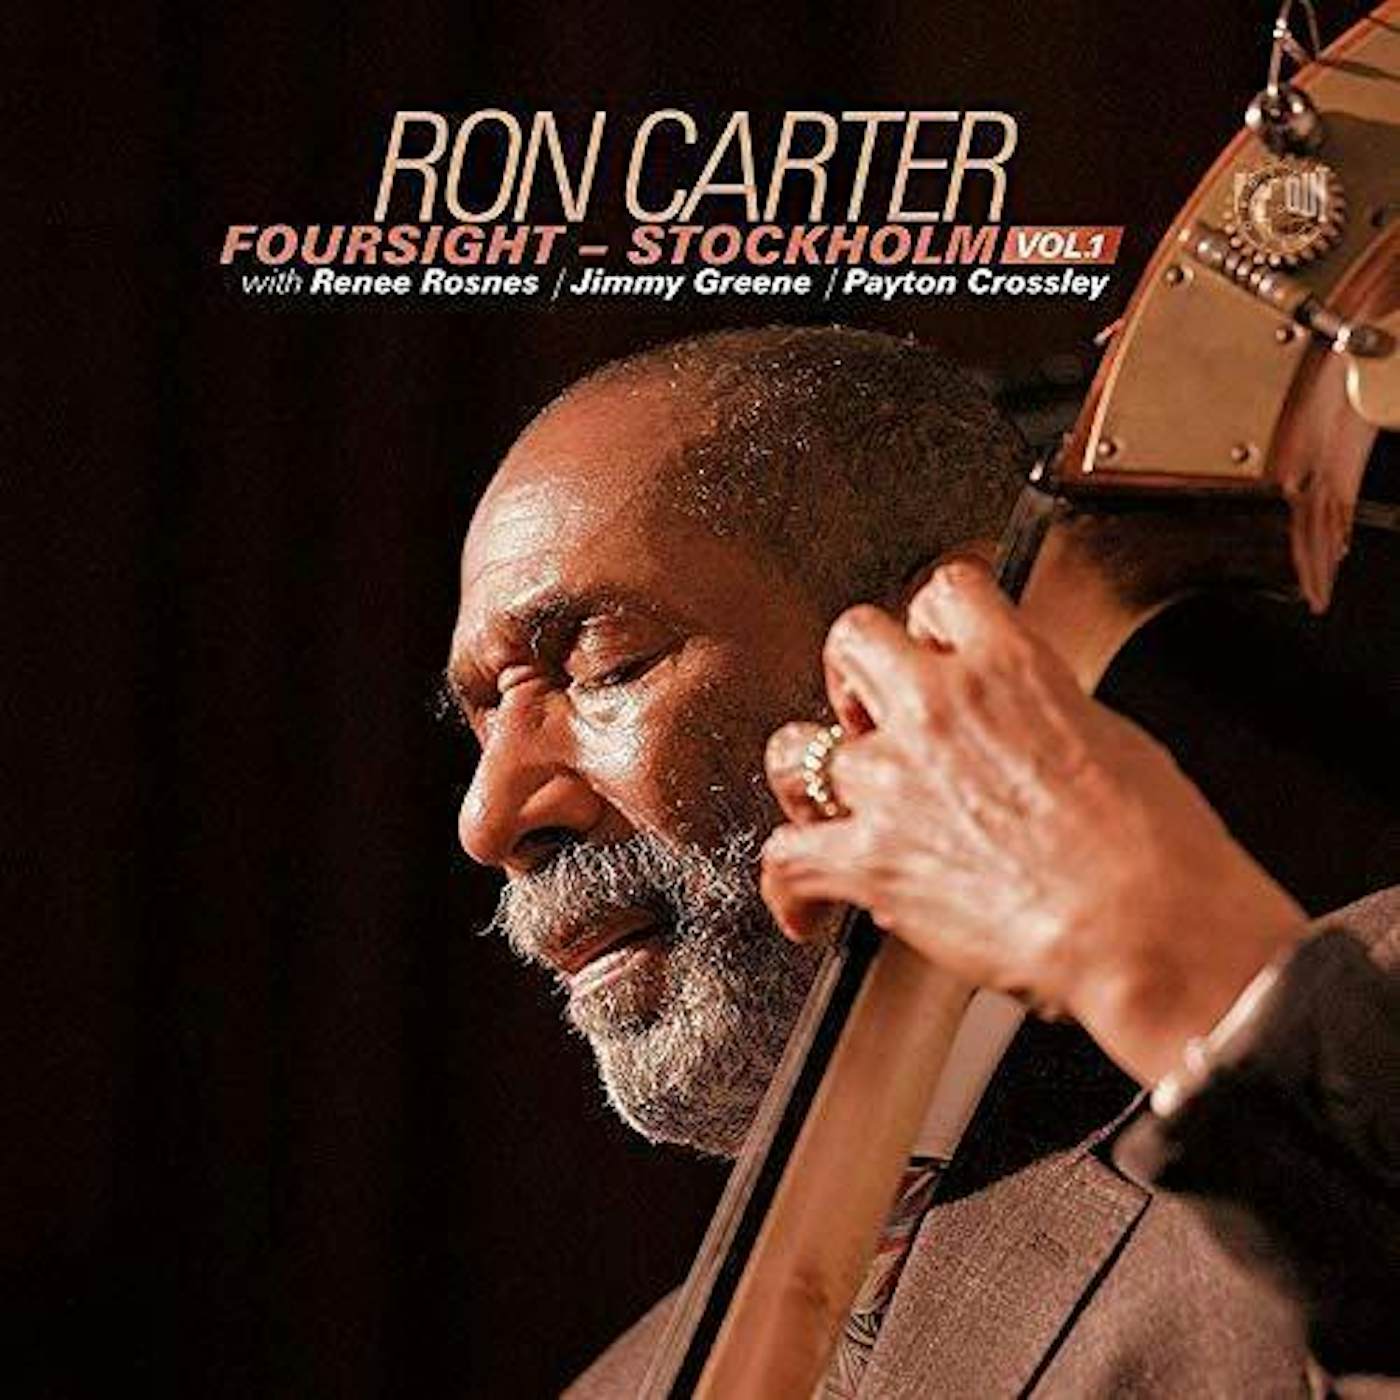 Ron Carter Foursight Live in Stockholm Double Vinyl Album